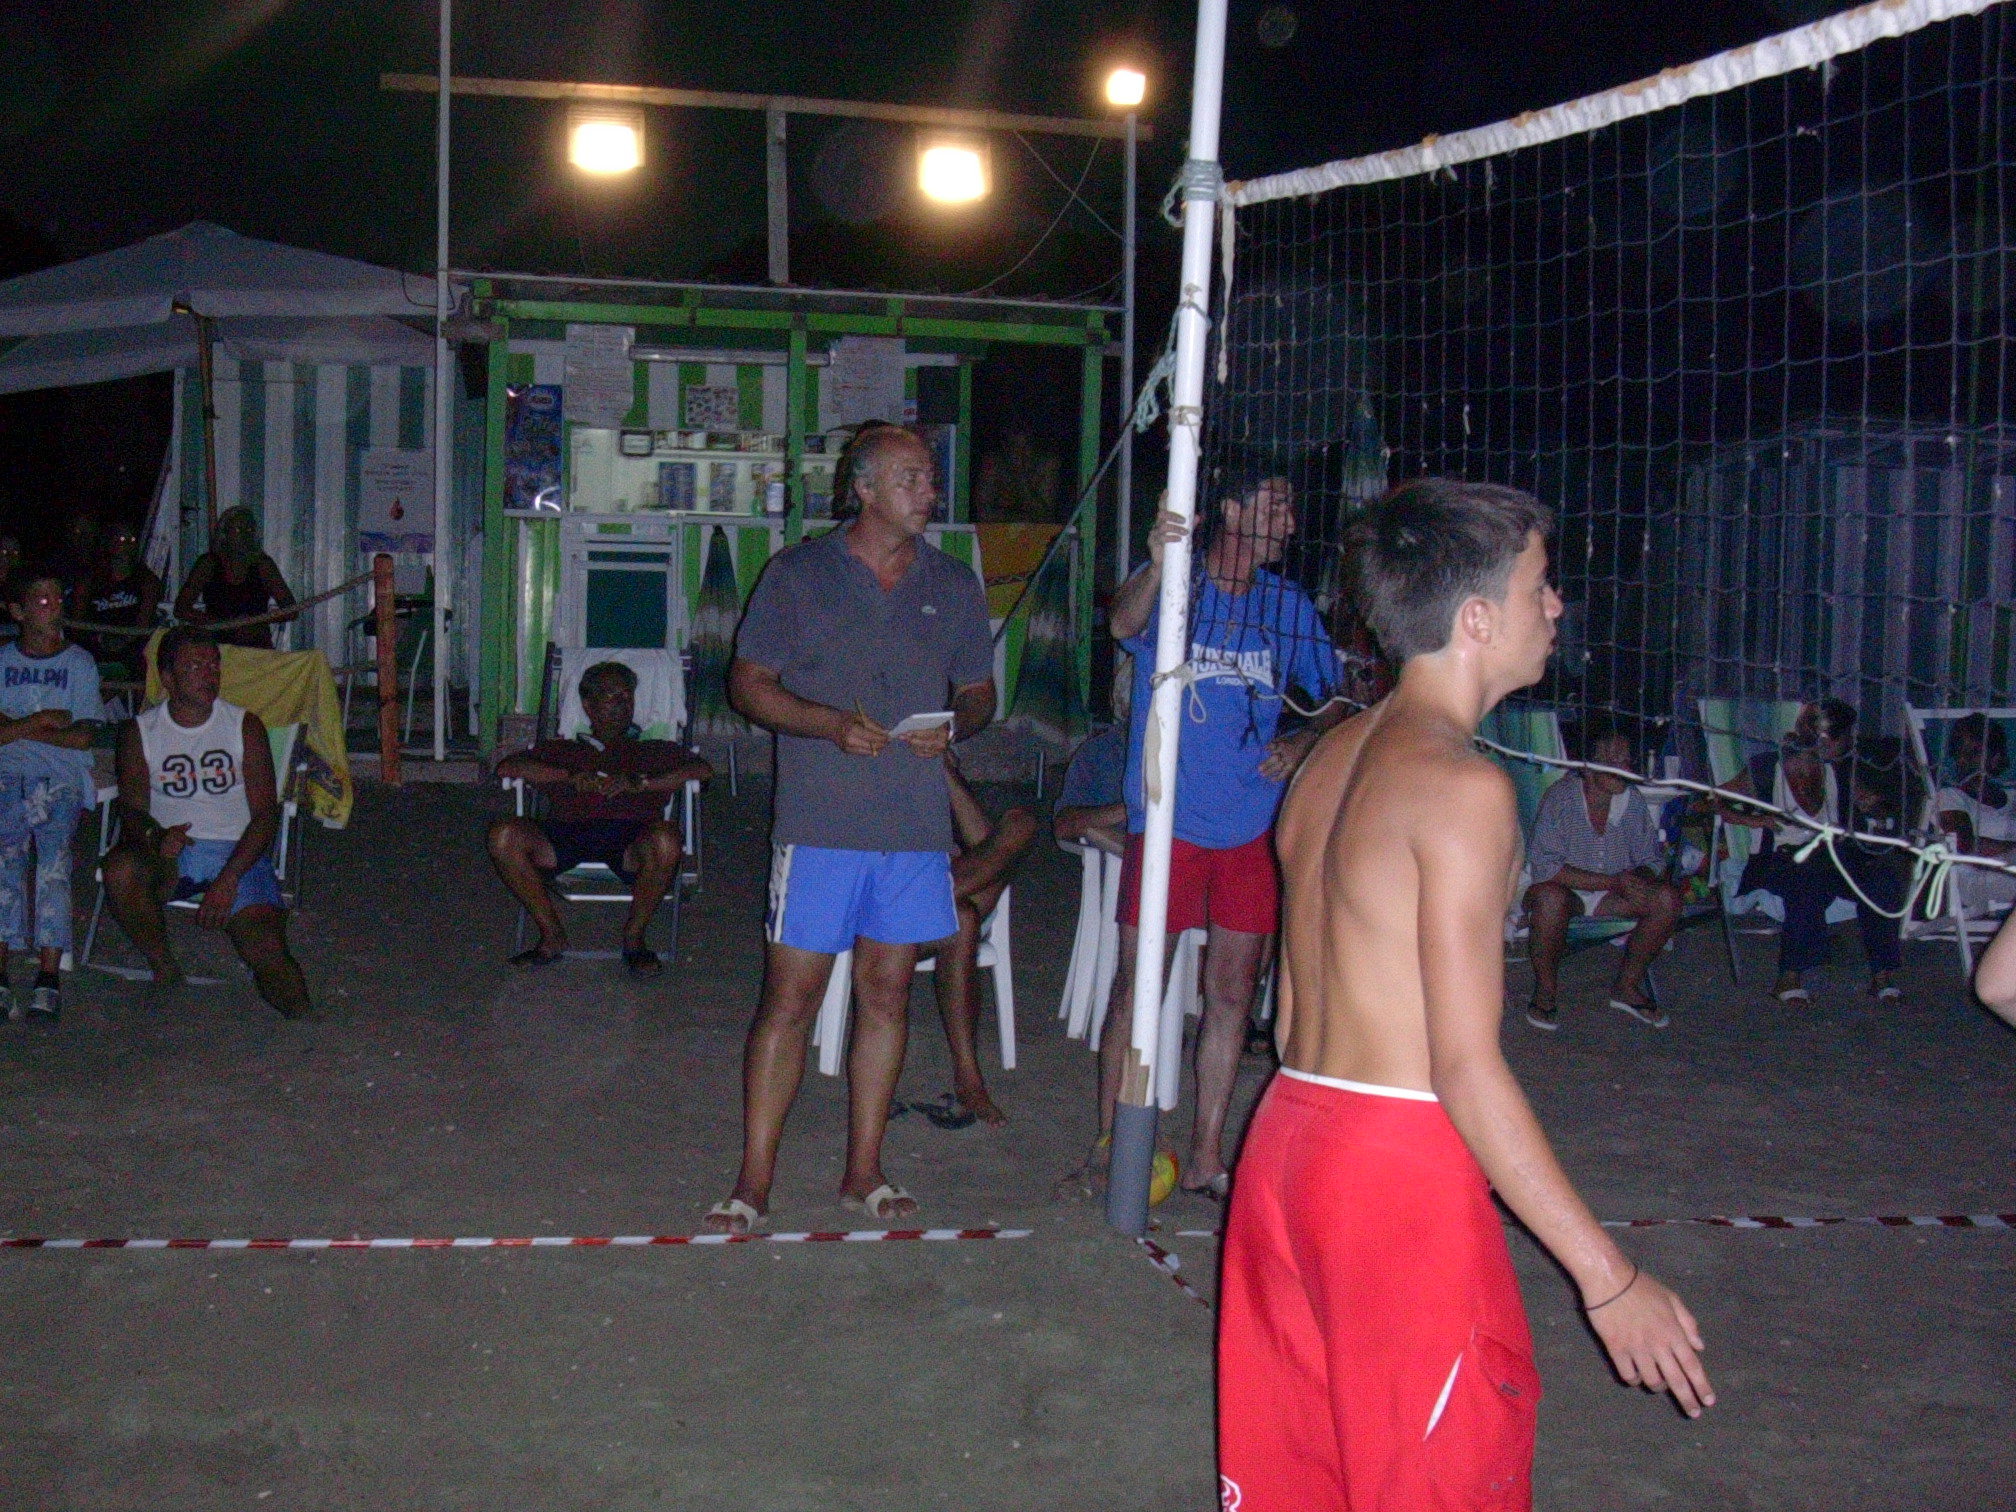 Torneo Beach Volley